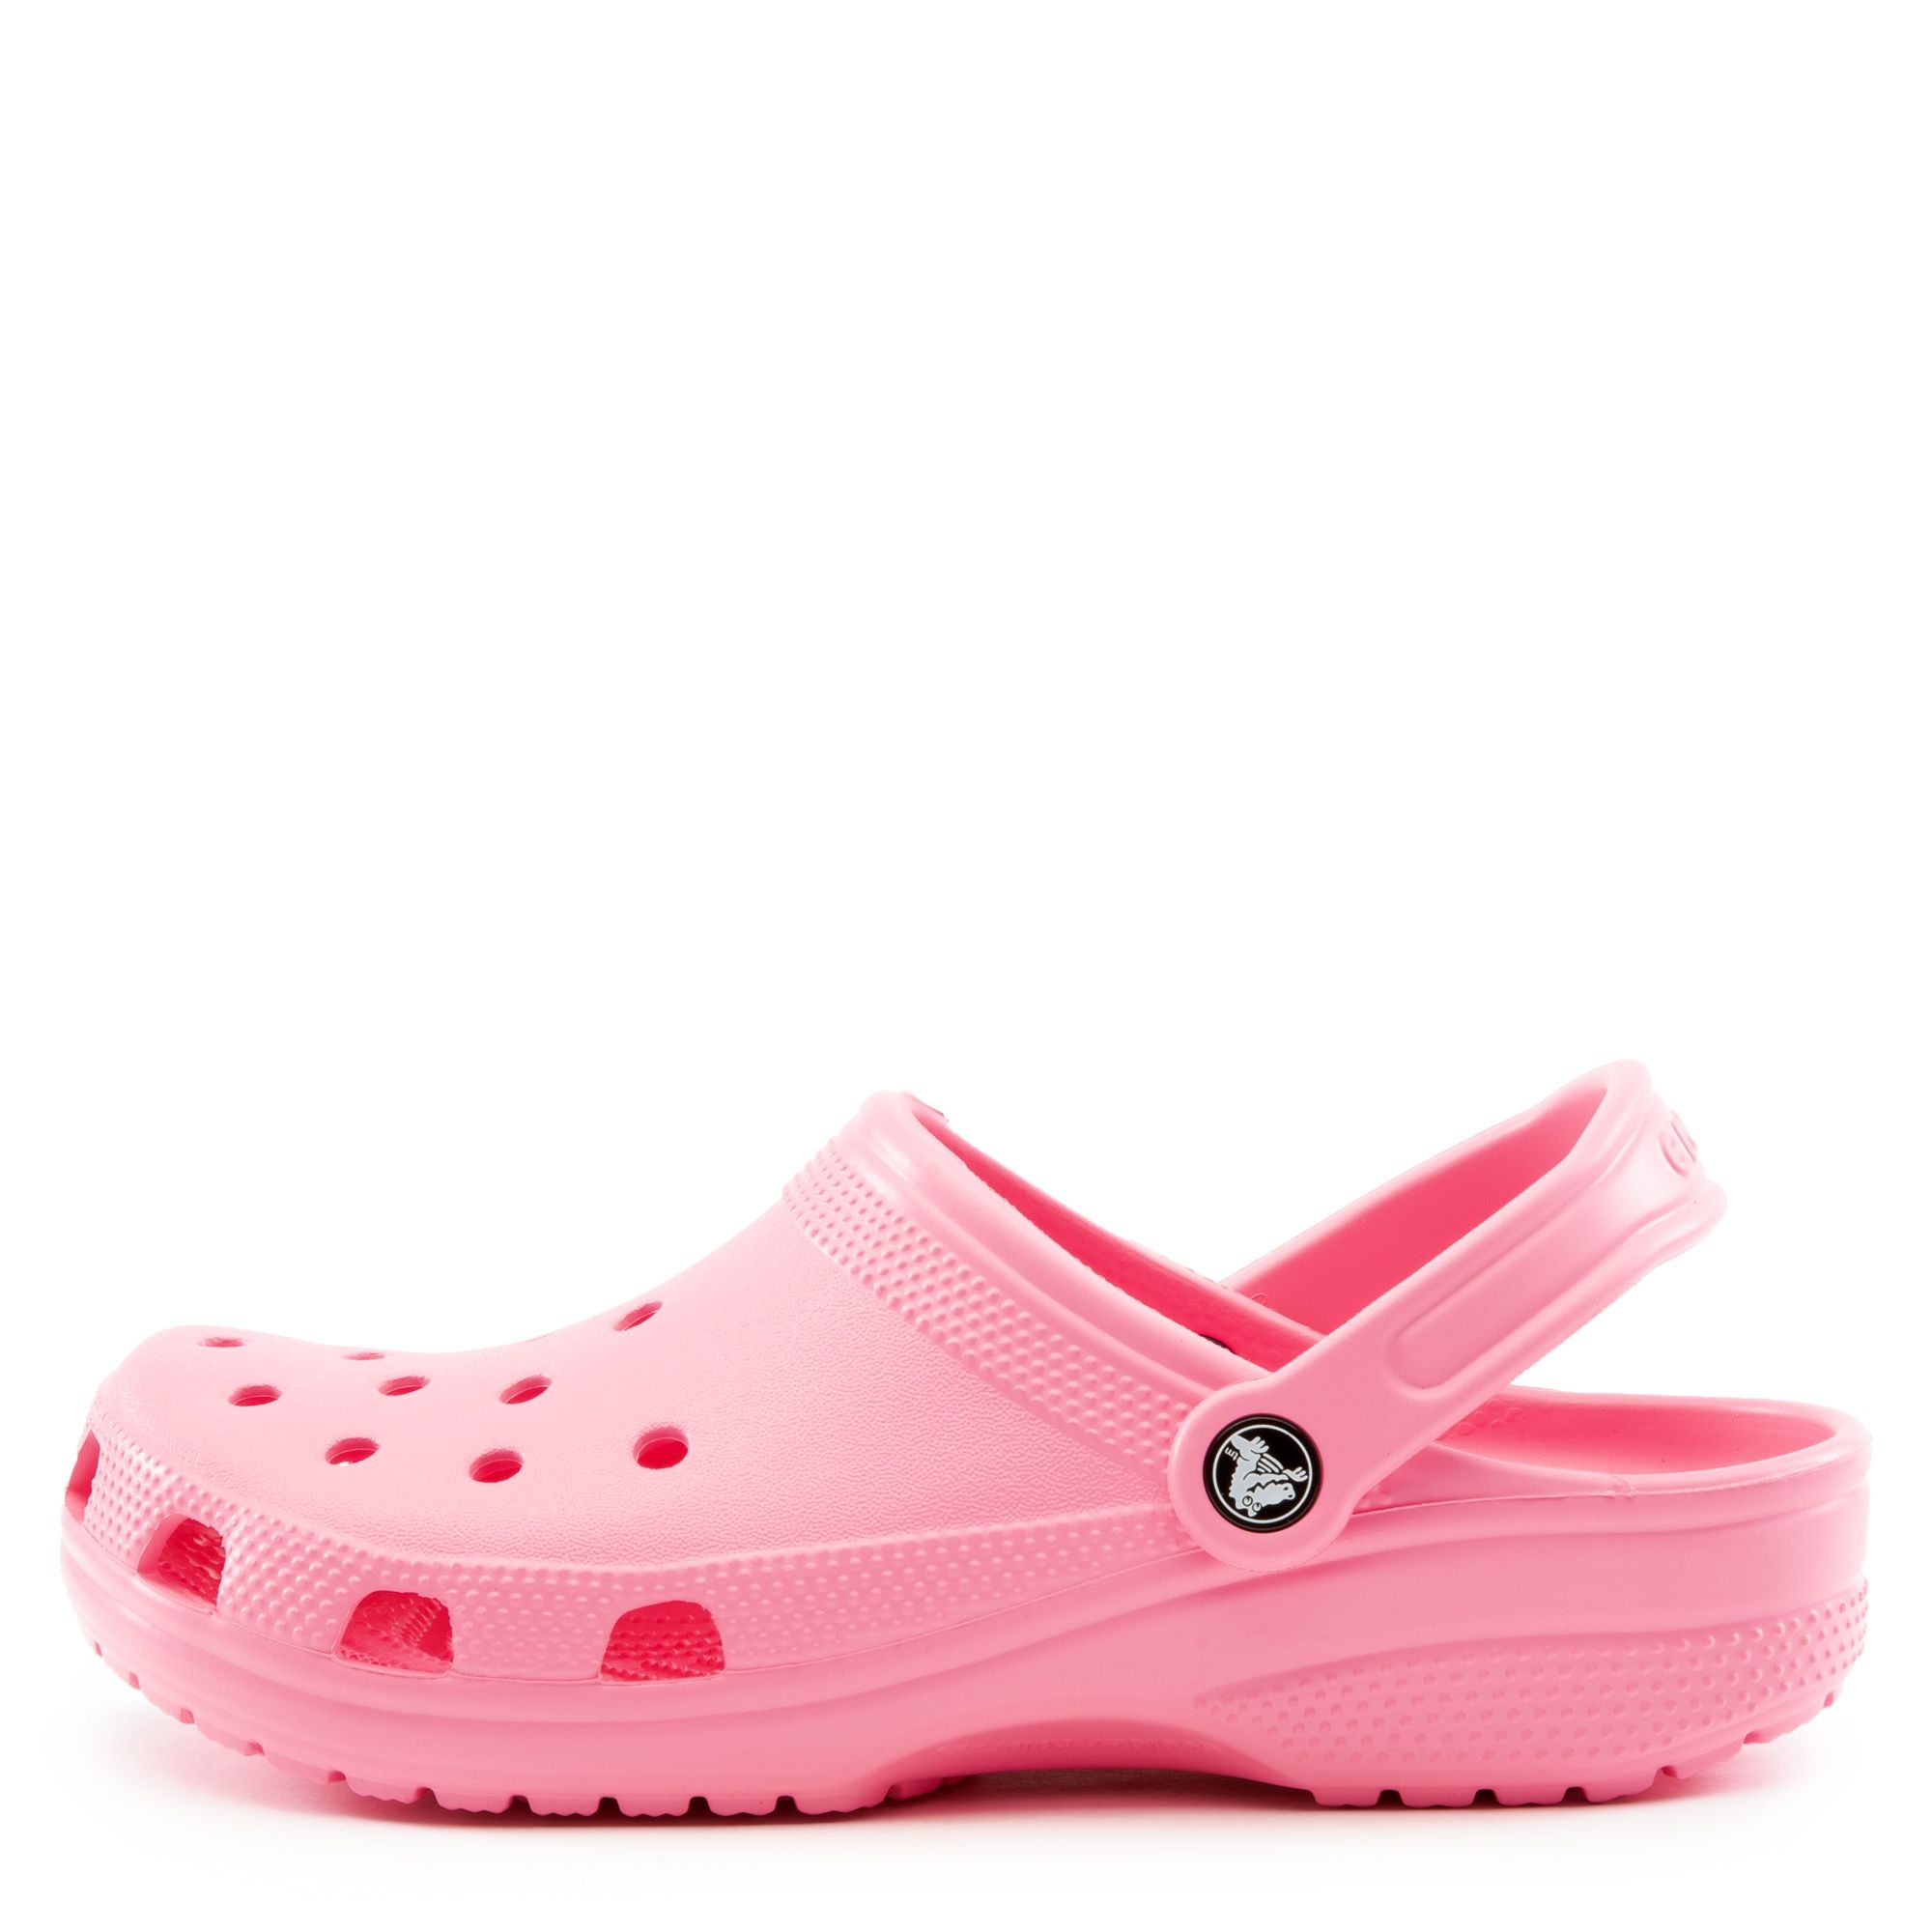 New Season Crocs Classic Lined Clog in Pink Lemonade 